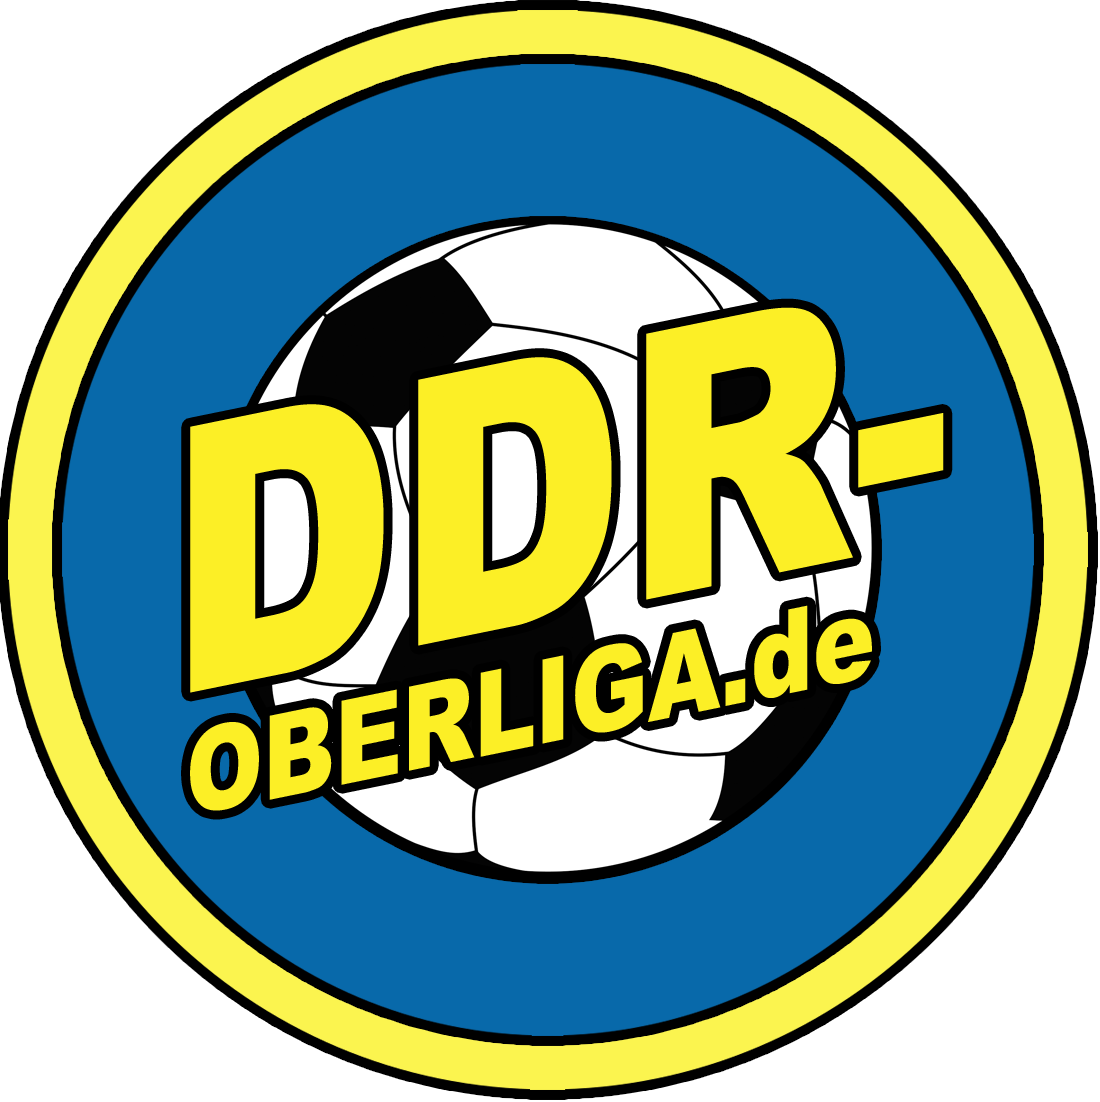 DDR-Oberliga.de